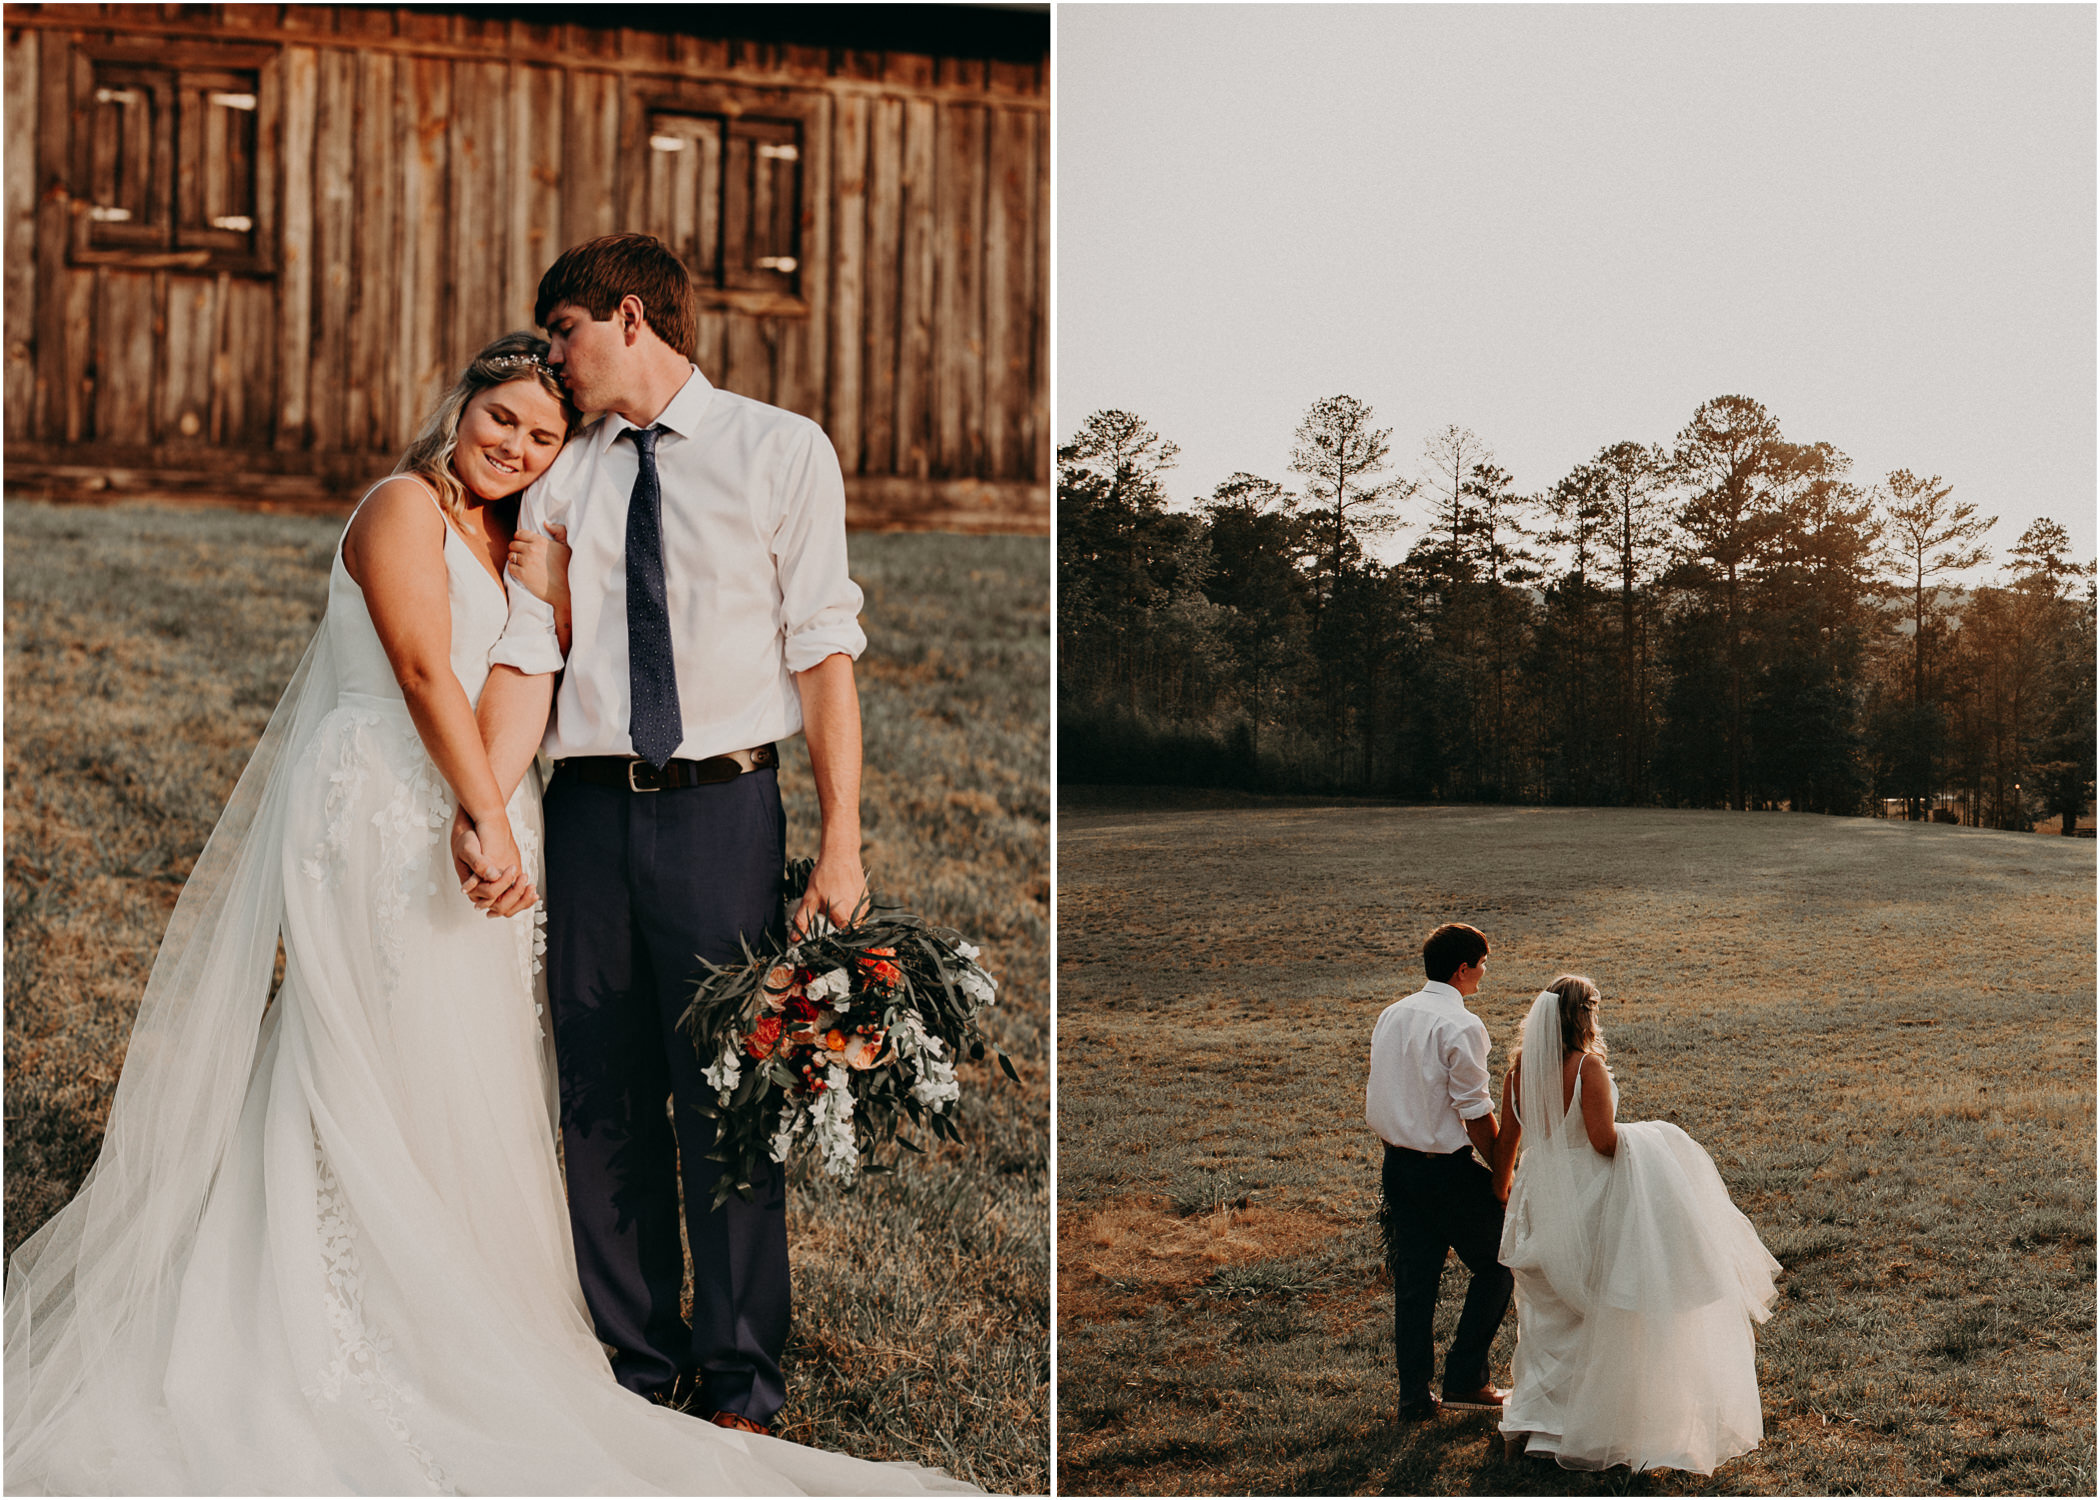 Atlanta_Wedding Day || The Farm at Rome-Ga, Aline Marin Photography77.jpg